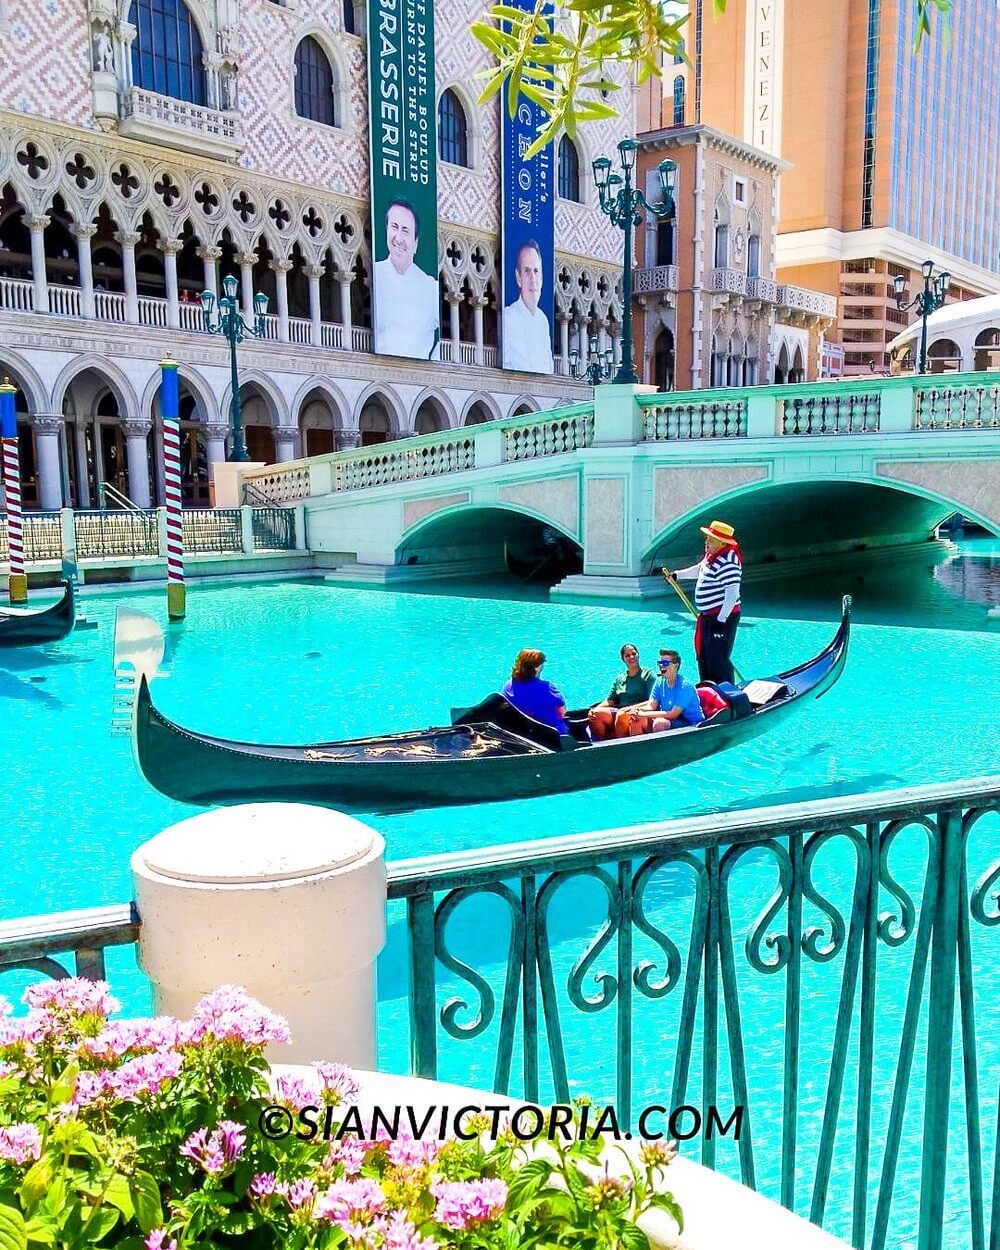 Sian-Victoria-The-Venetian-resort-hotel-las-vegas-nevada-italian-themed-gondola-ride-sightseeing-tourist-attraction-america-usa+(2).jpg